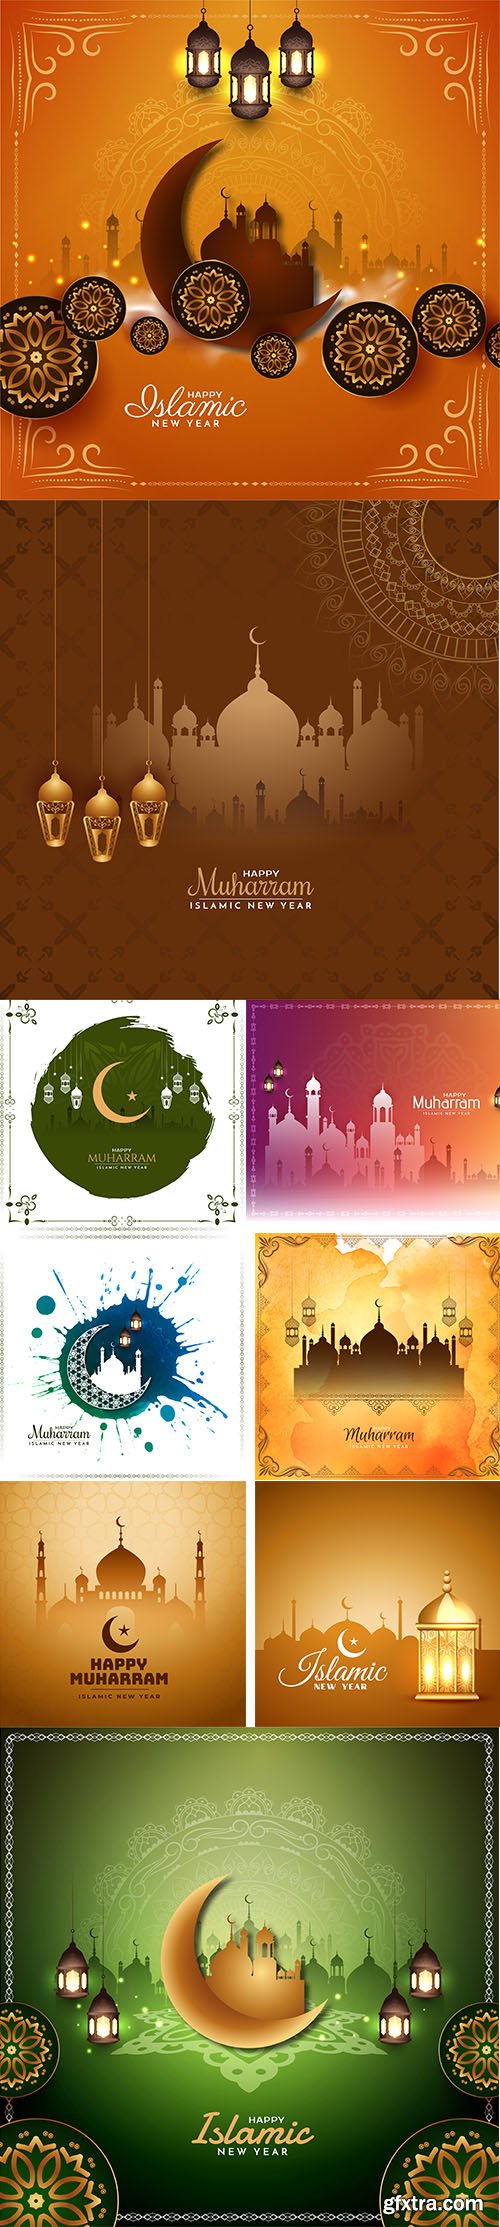 Happy muharram islamic new year beautiful mosque background vector